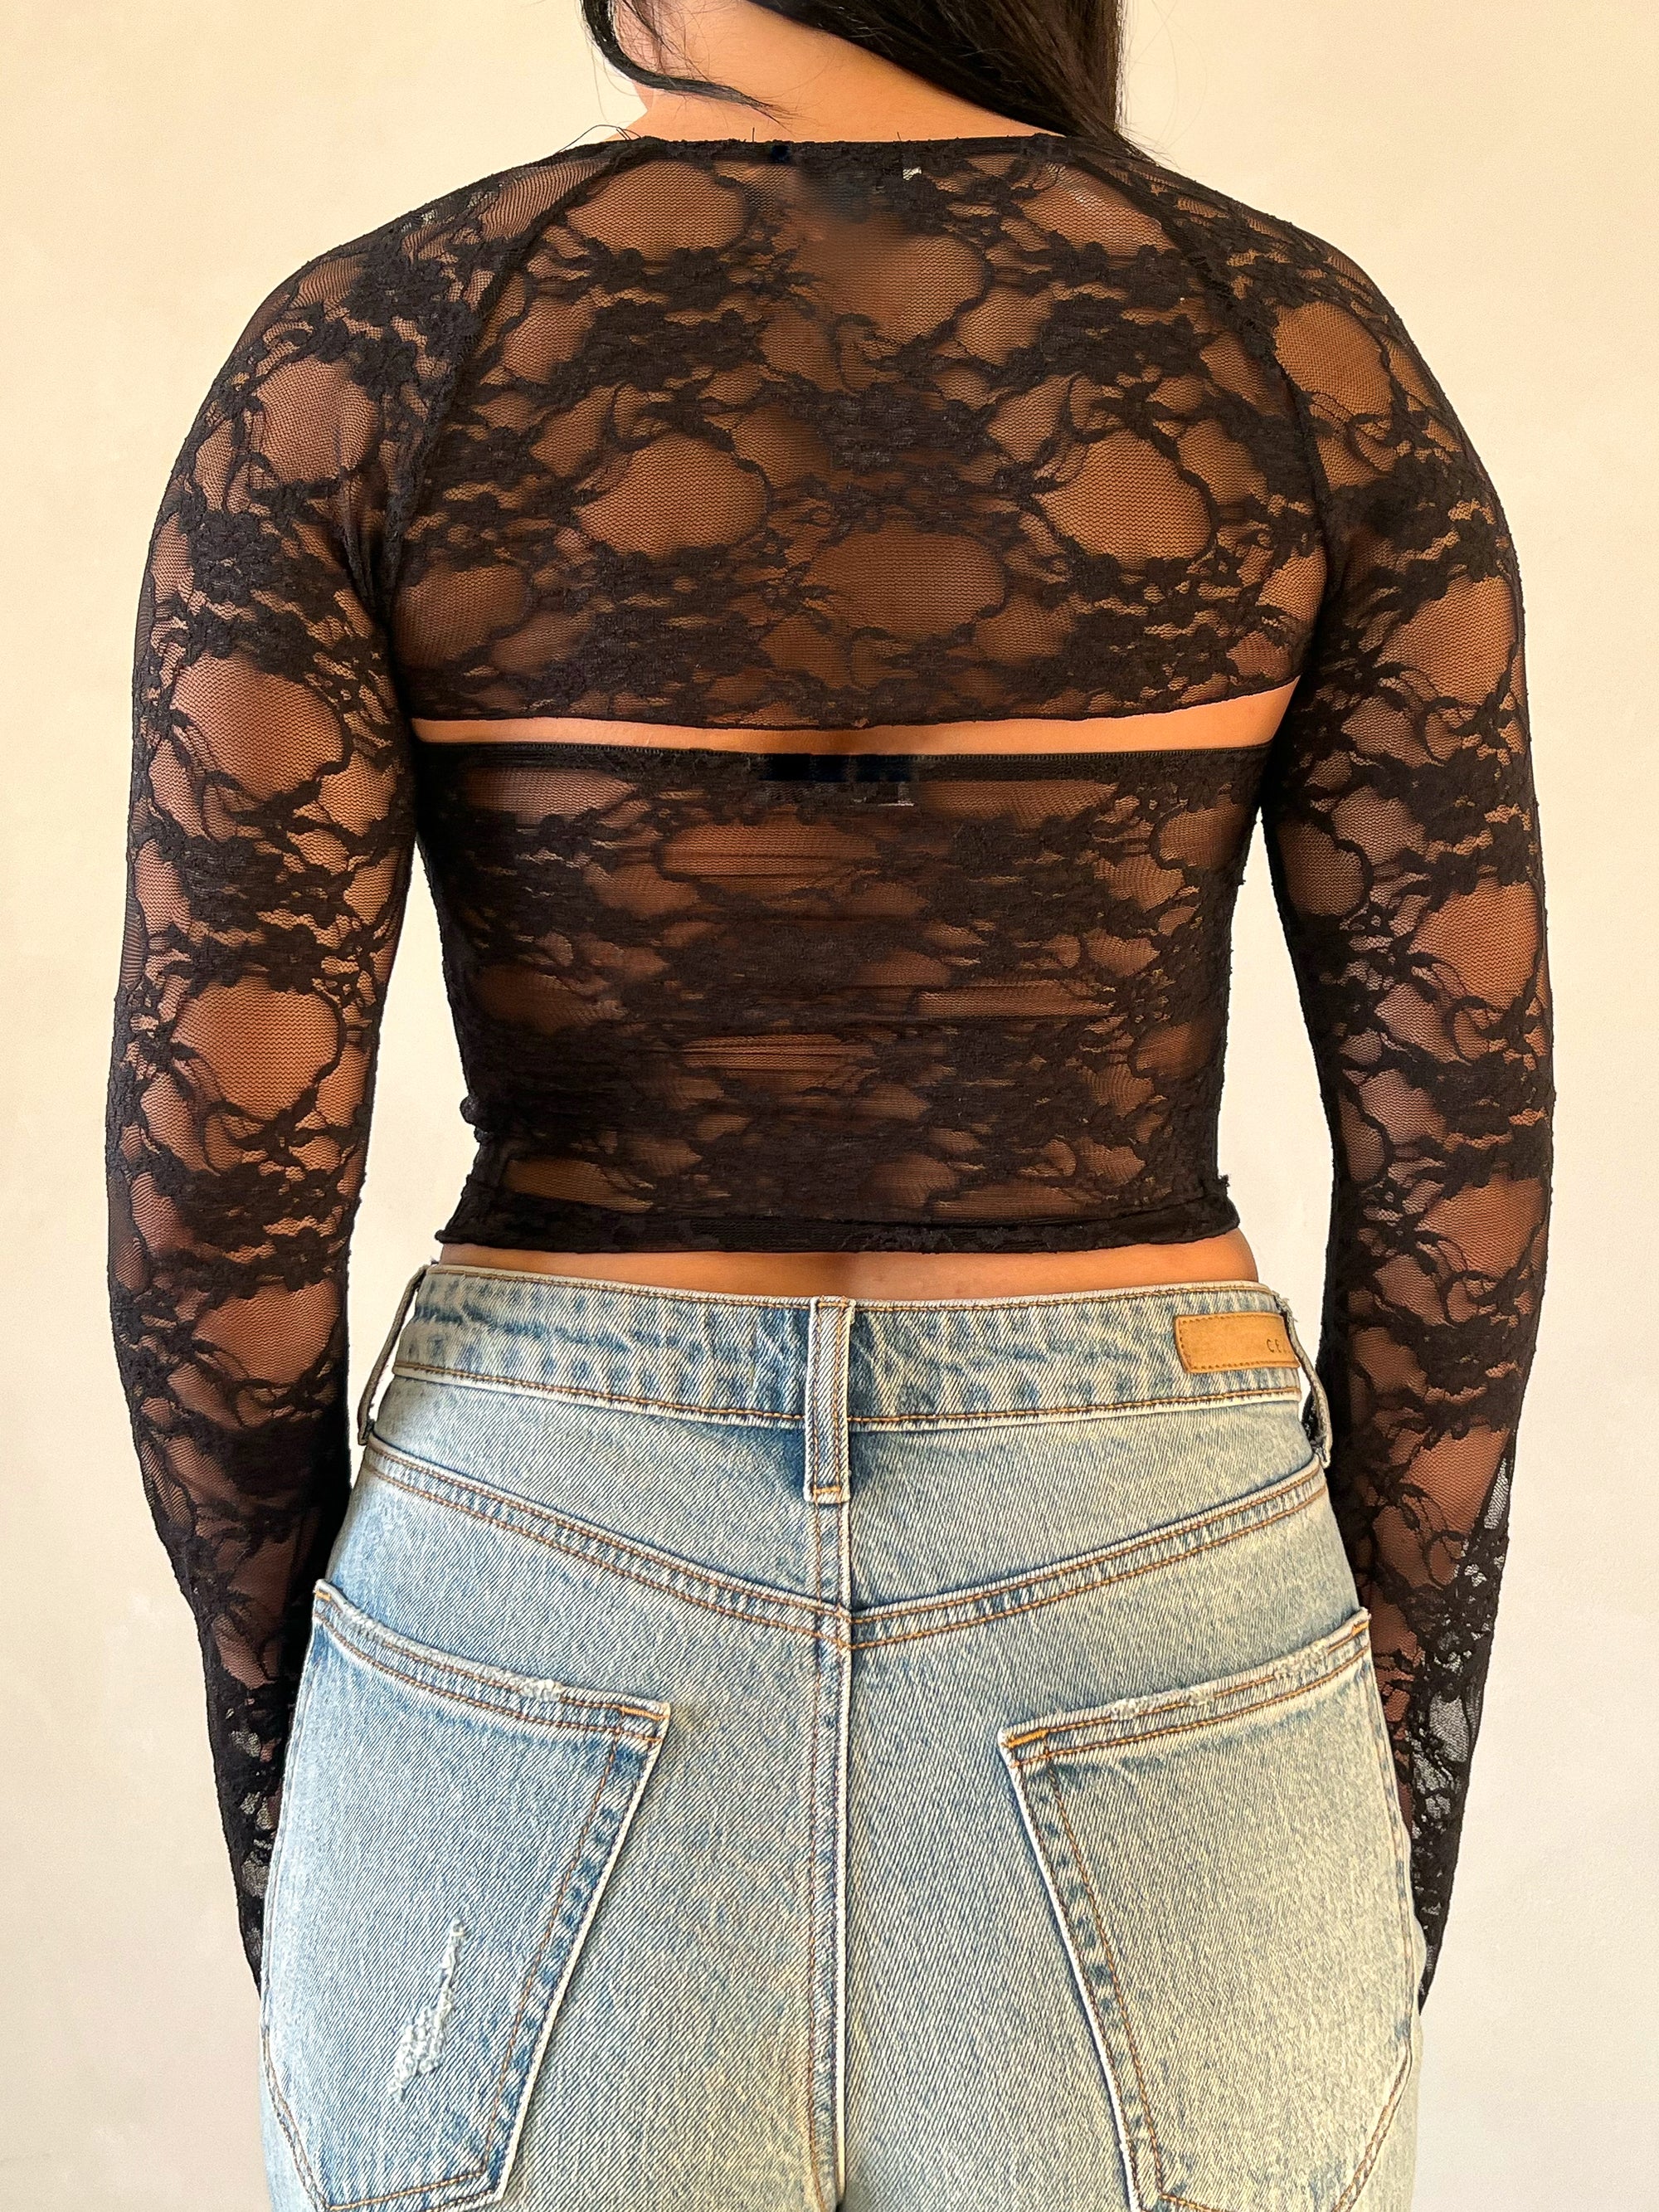 Tay Shorts (Black) - Laura's Boutique, Inc